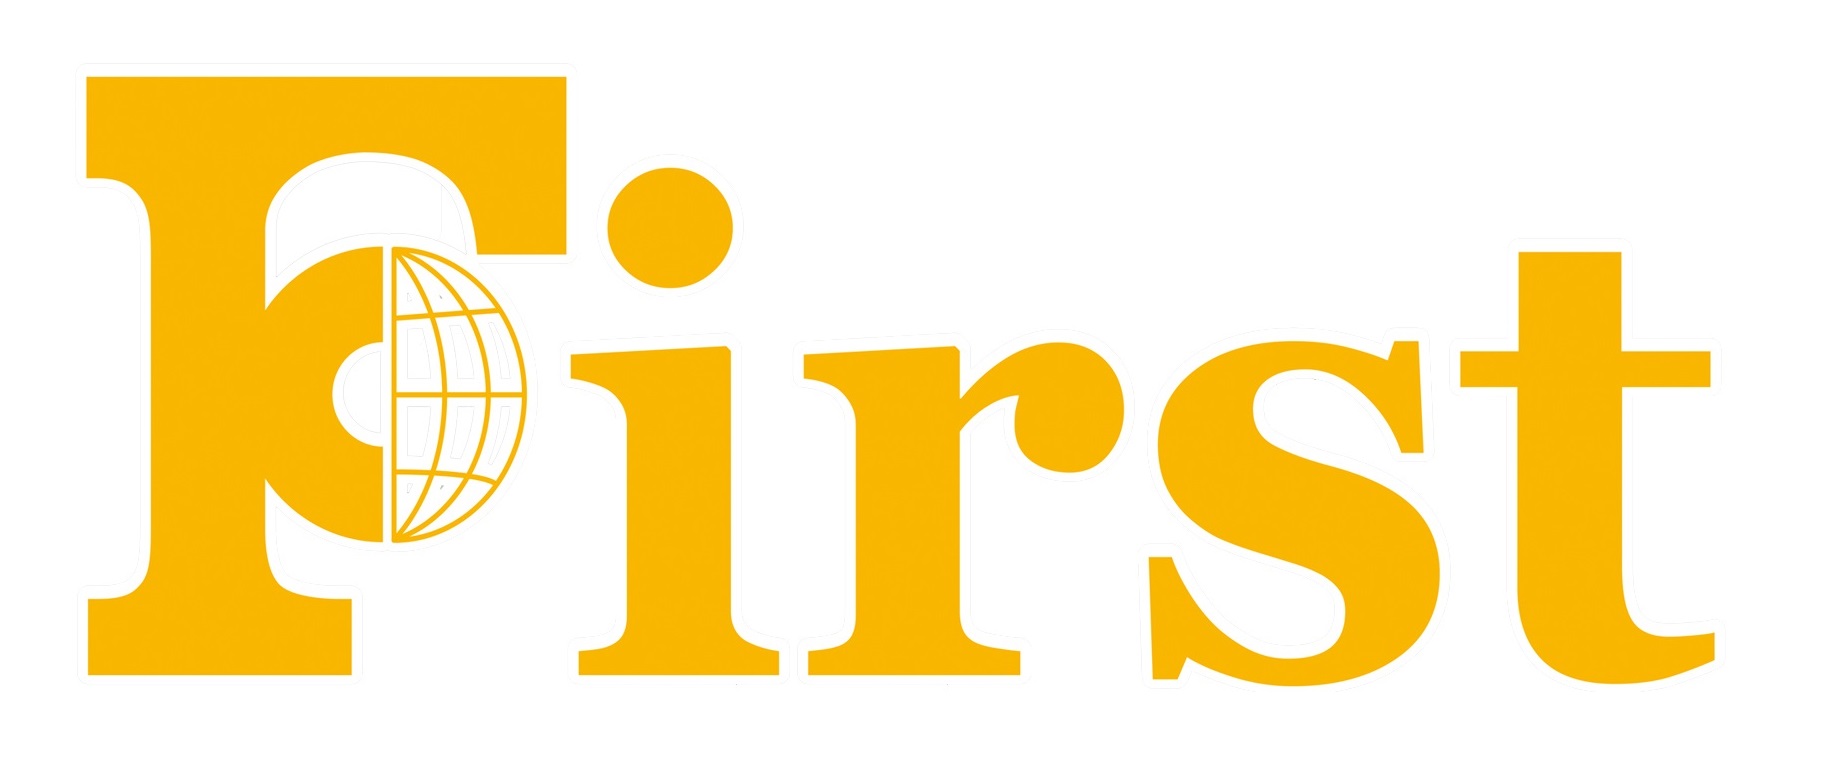 First Exchange - FIRST logo